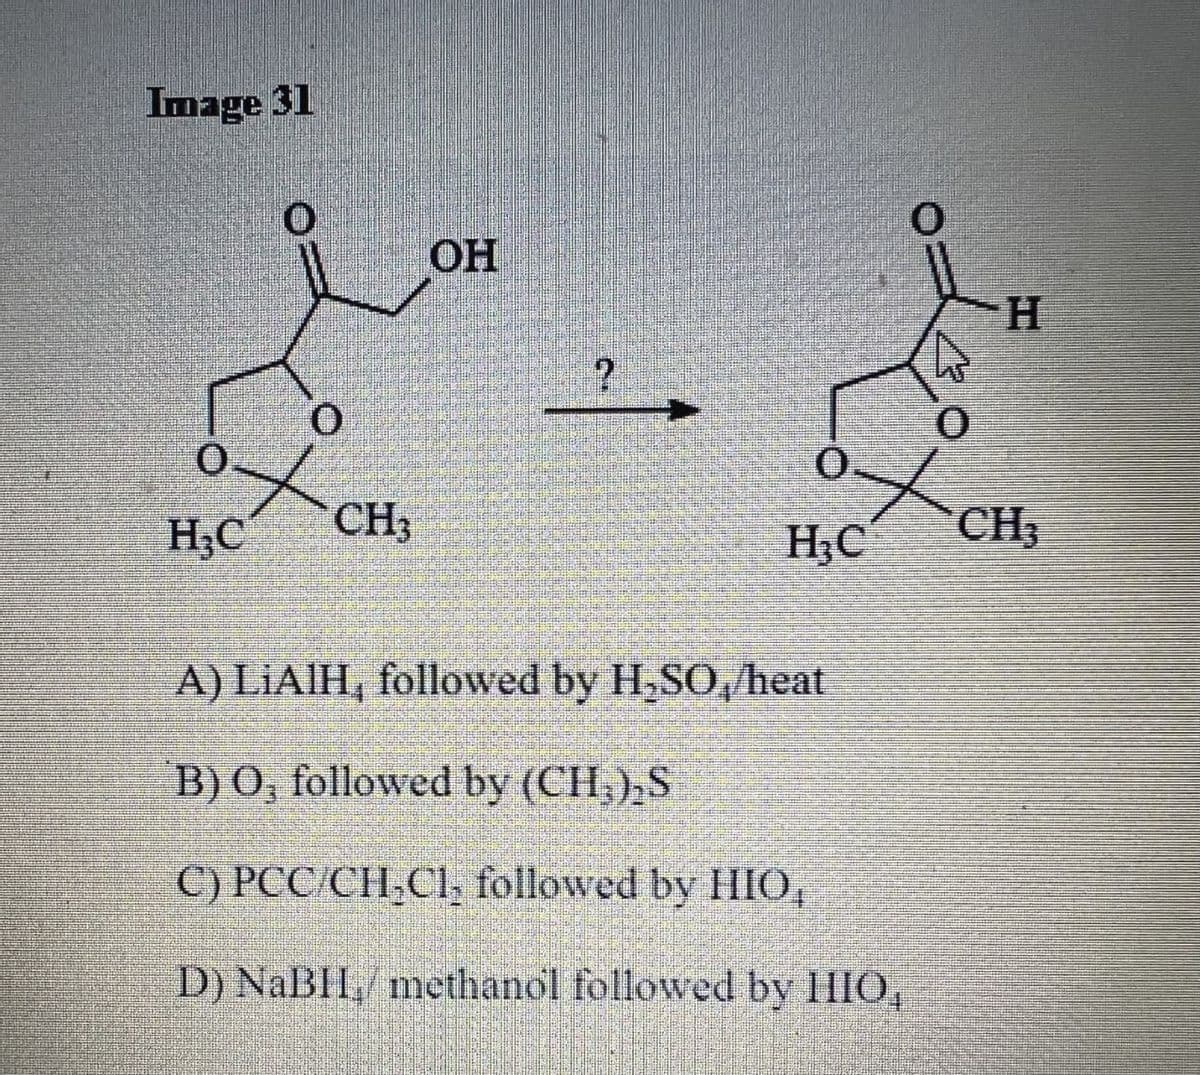 Image 31
0
H₂C
0
CH3
OH
?
0
H₂C
A) LiAlH, followed by H₂SO,/heat
B) O, followed by (CH₂)₂S
C) PCC/CH₂Cl, followed by HIO,
D) NaBHL methanol followed by HIO,
(
H
CH₂